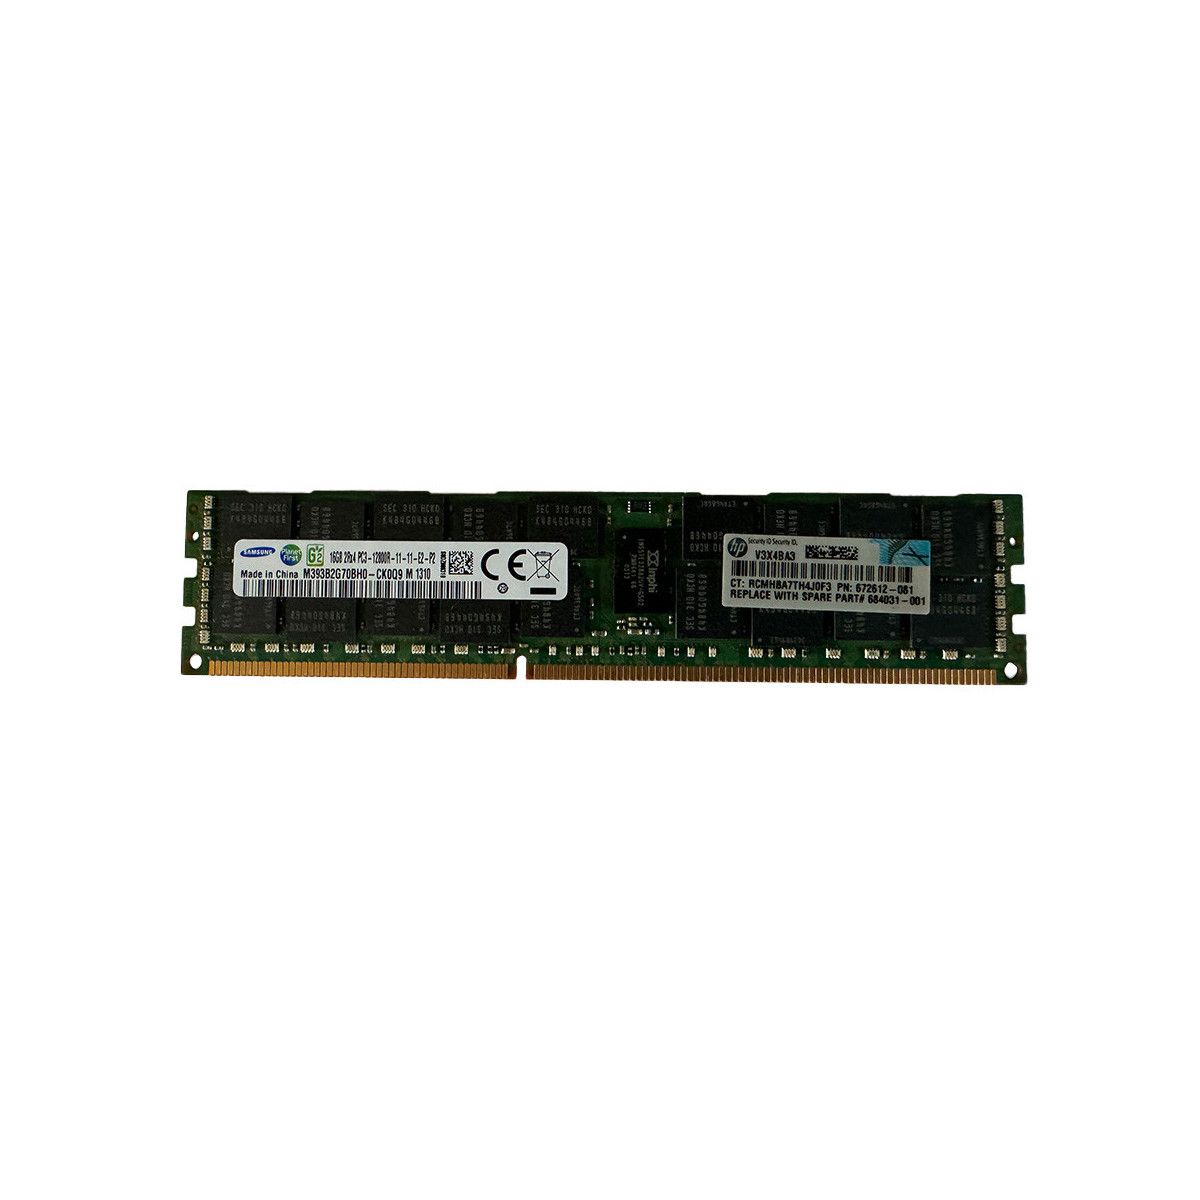 672633-B21-MS - Memstar 1x 16GB DDR3-1600 RDIMM PC3-12800R - Mem-Star OEM compatibile Memoria 1 - Memstar 